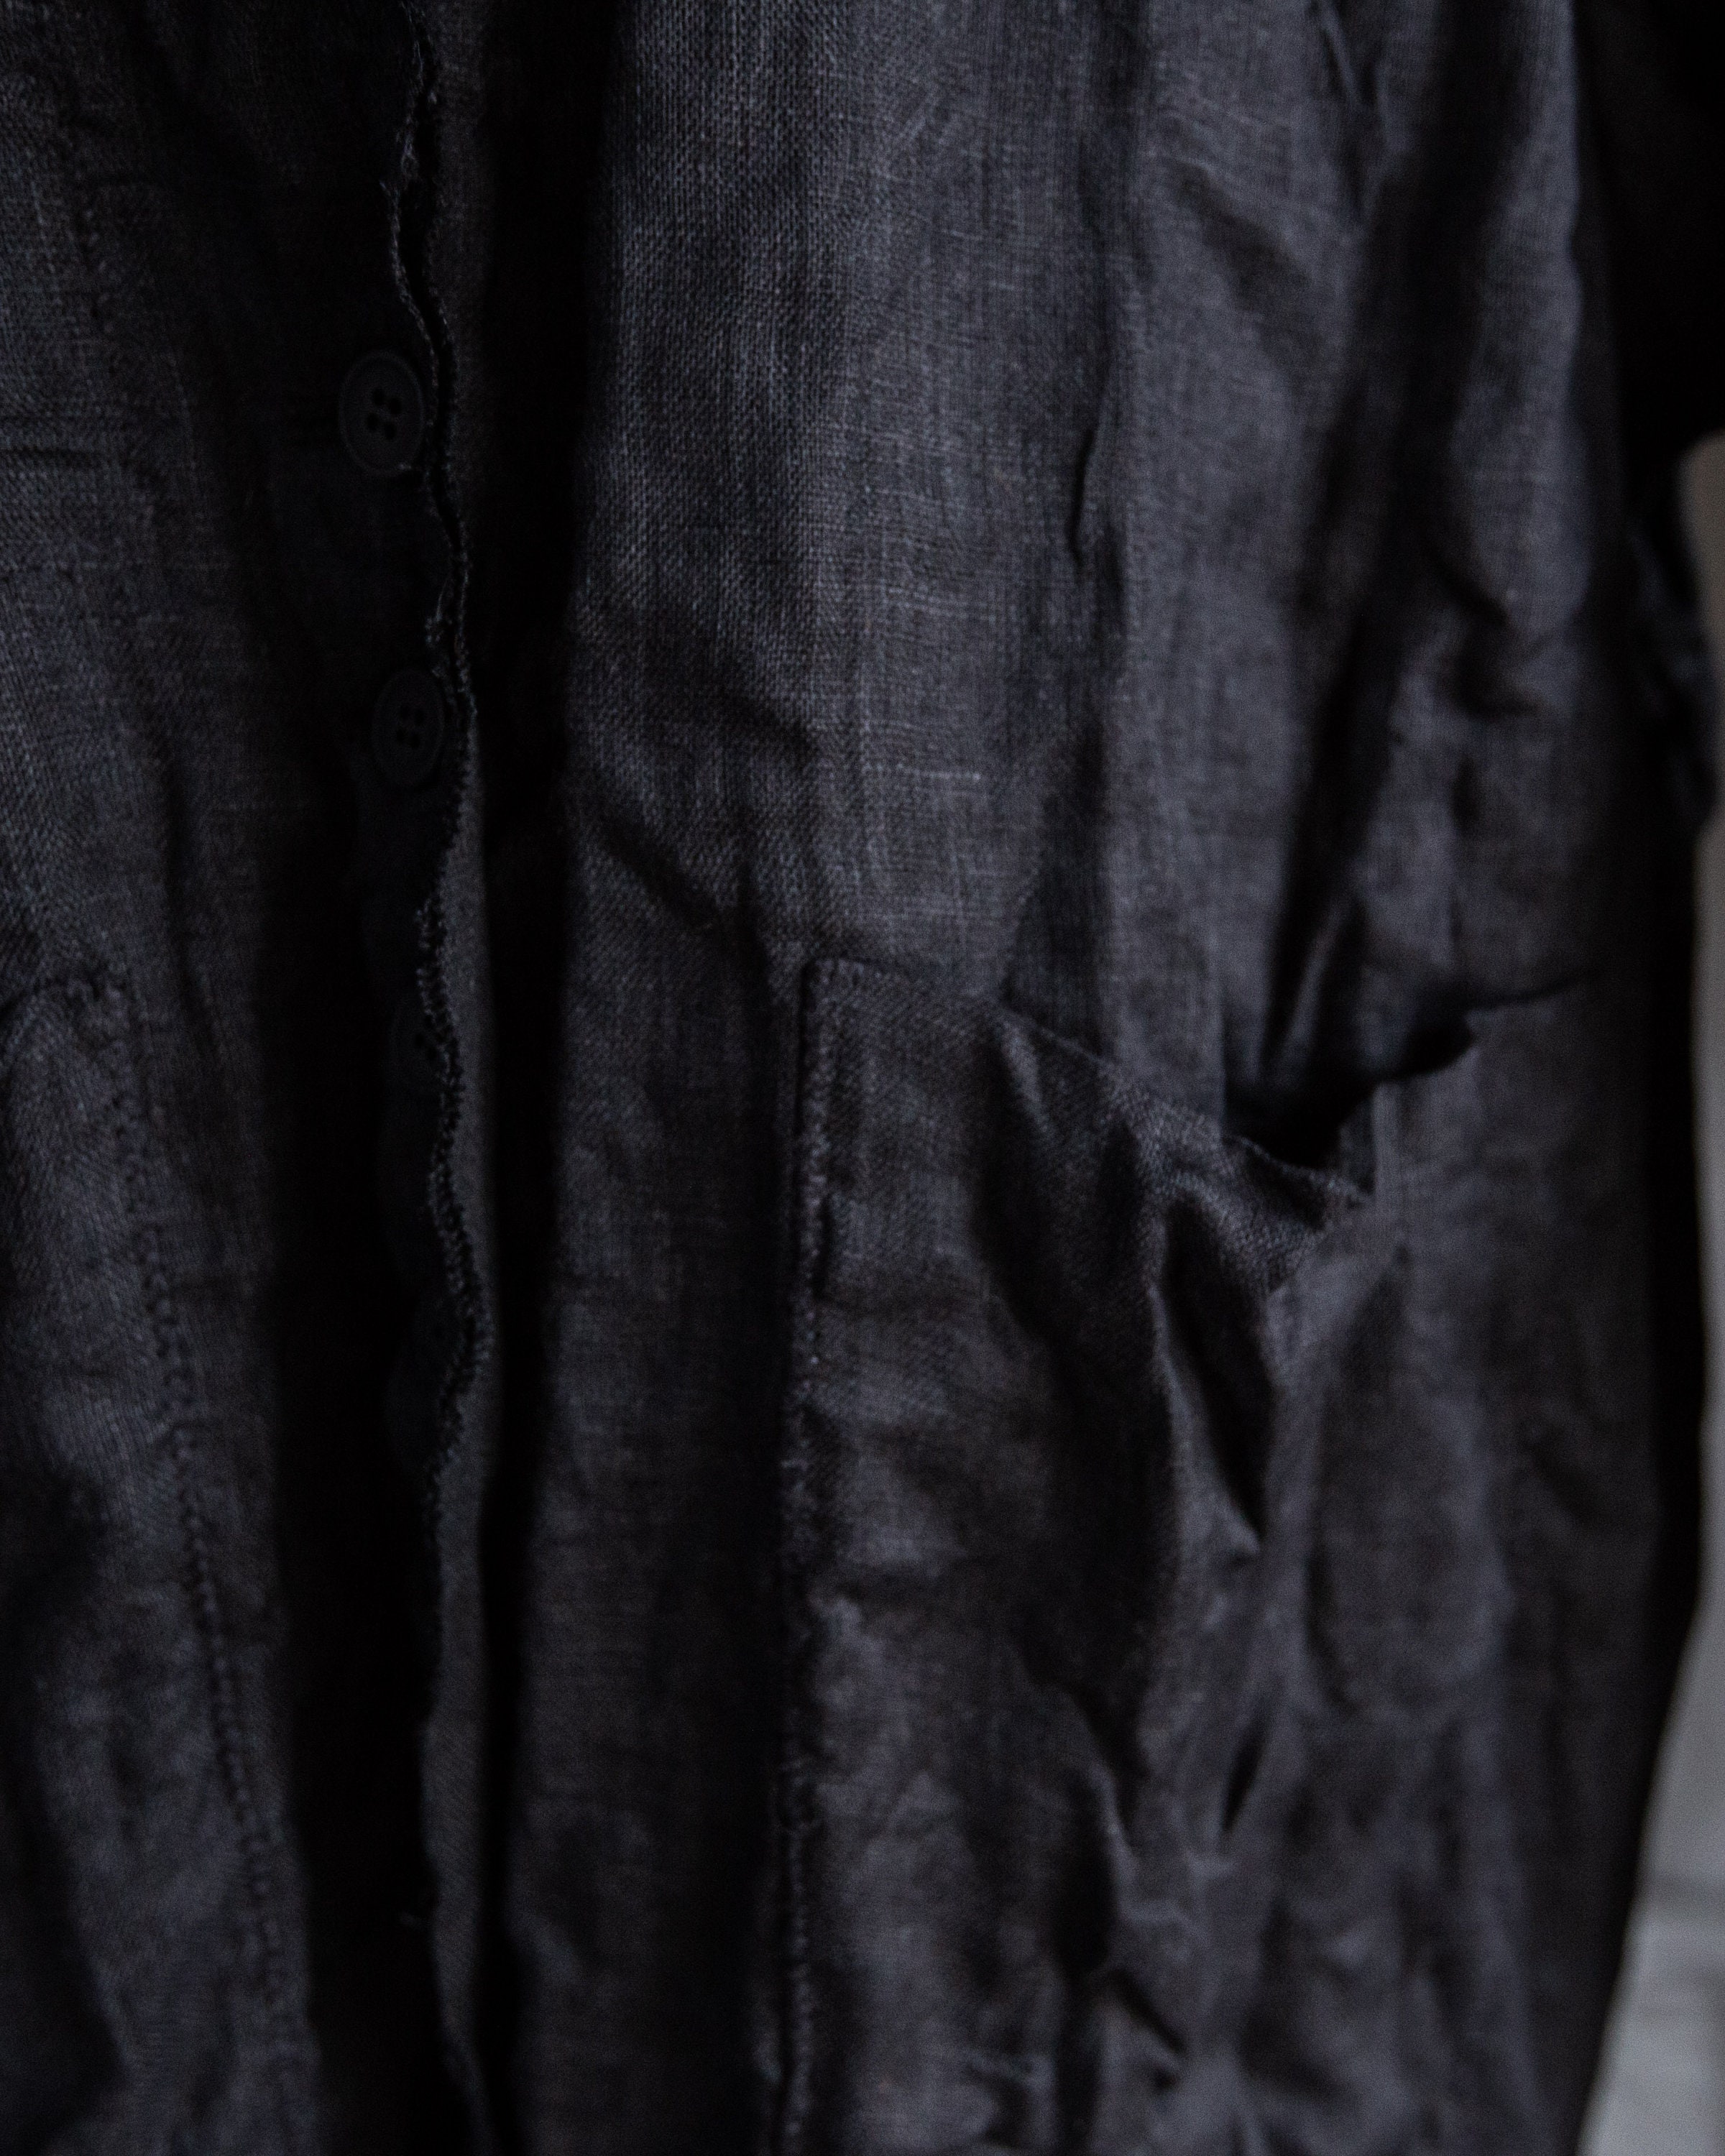 Black linen blazer FLAMEL. Linen jacket grey gauze blazer | Etsy